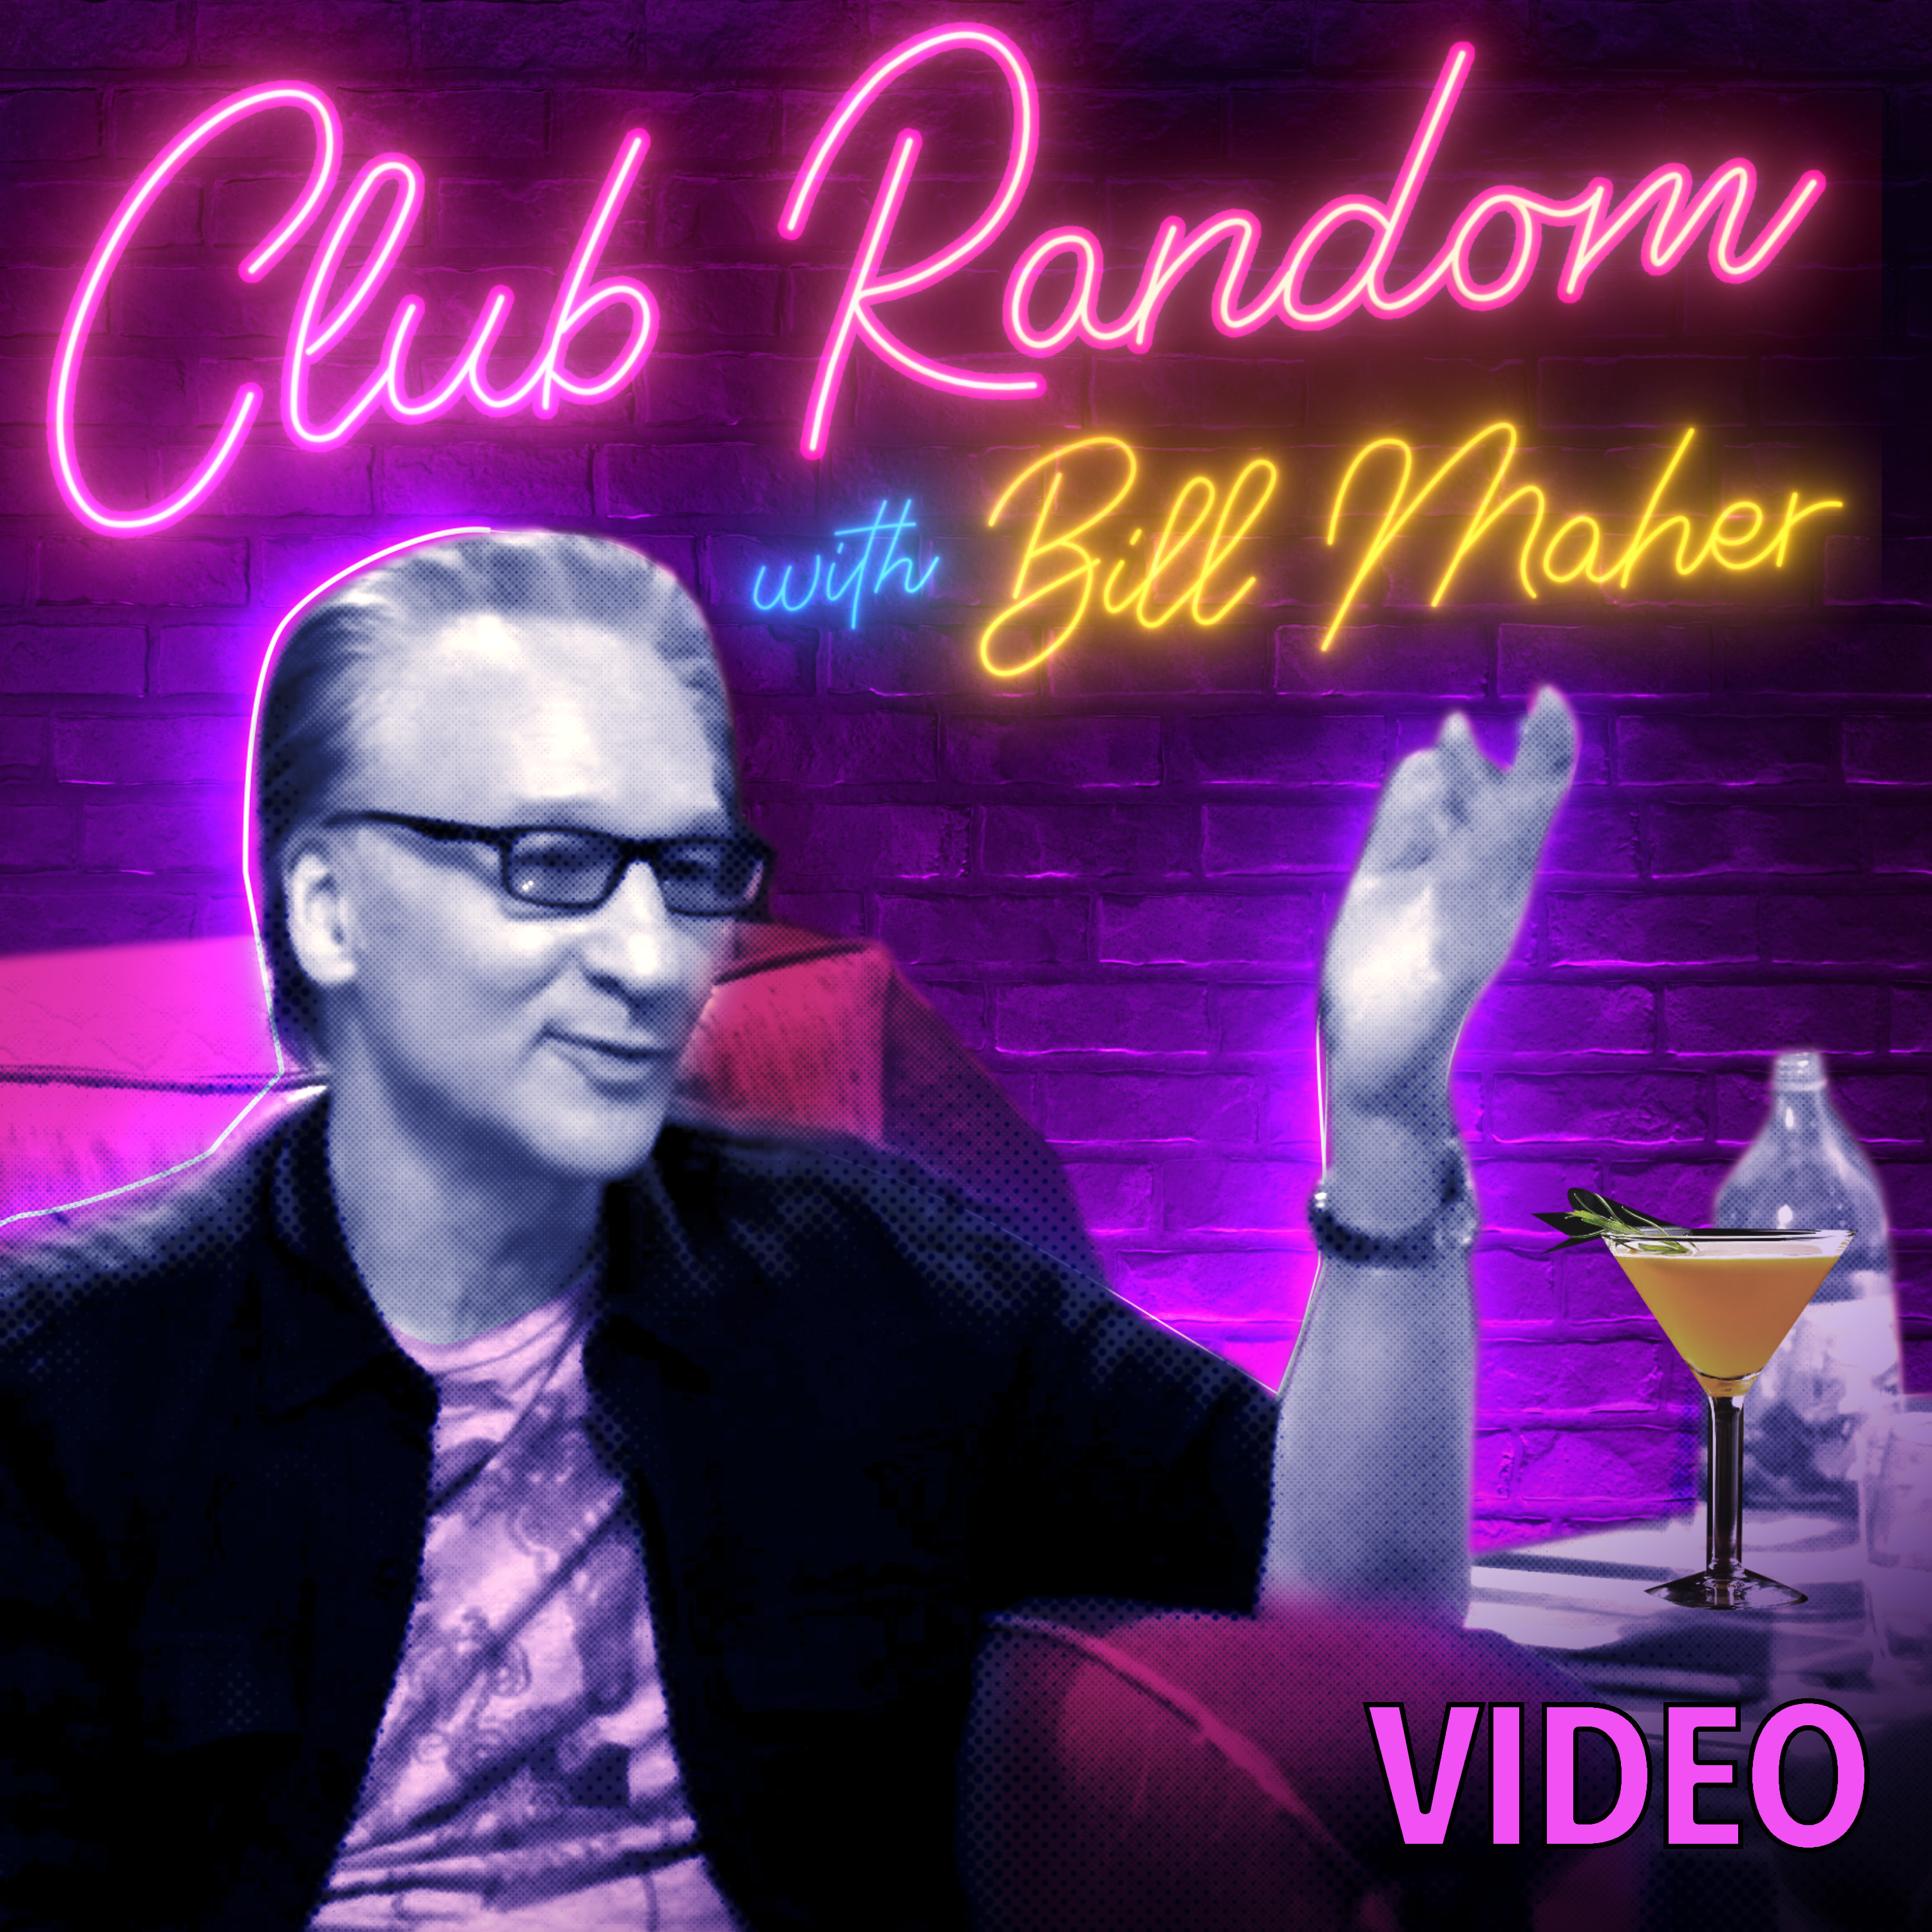 Video: Oliver Stone | Club Random with Bill Maher